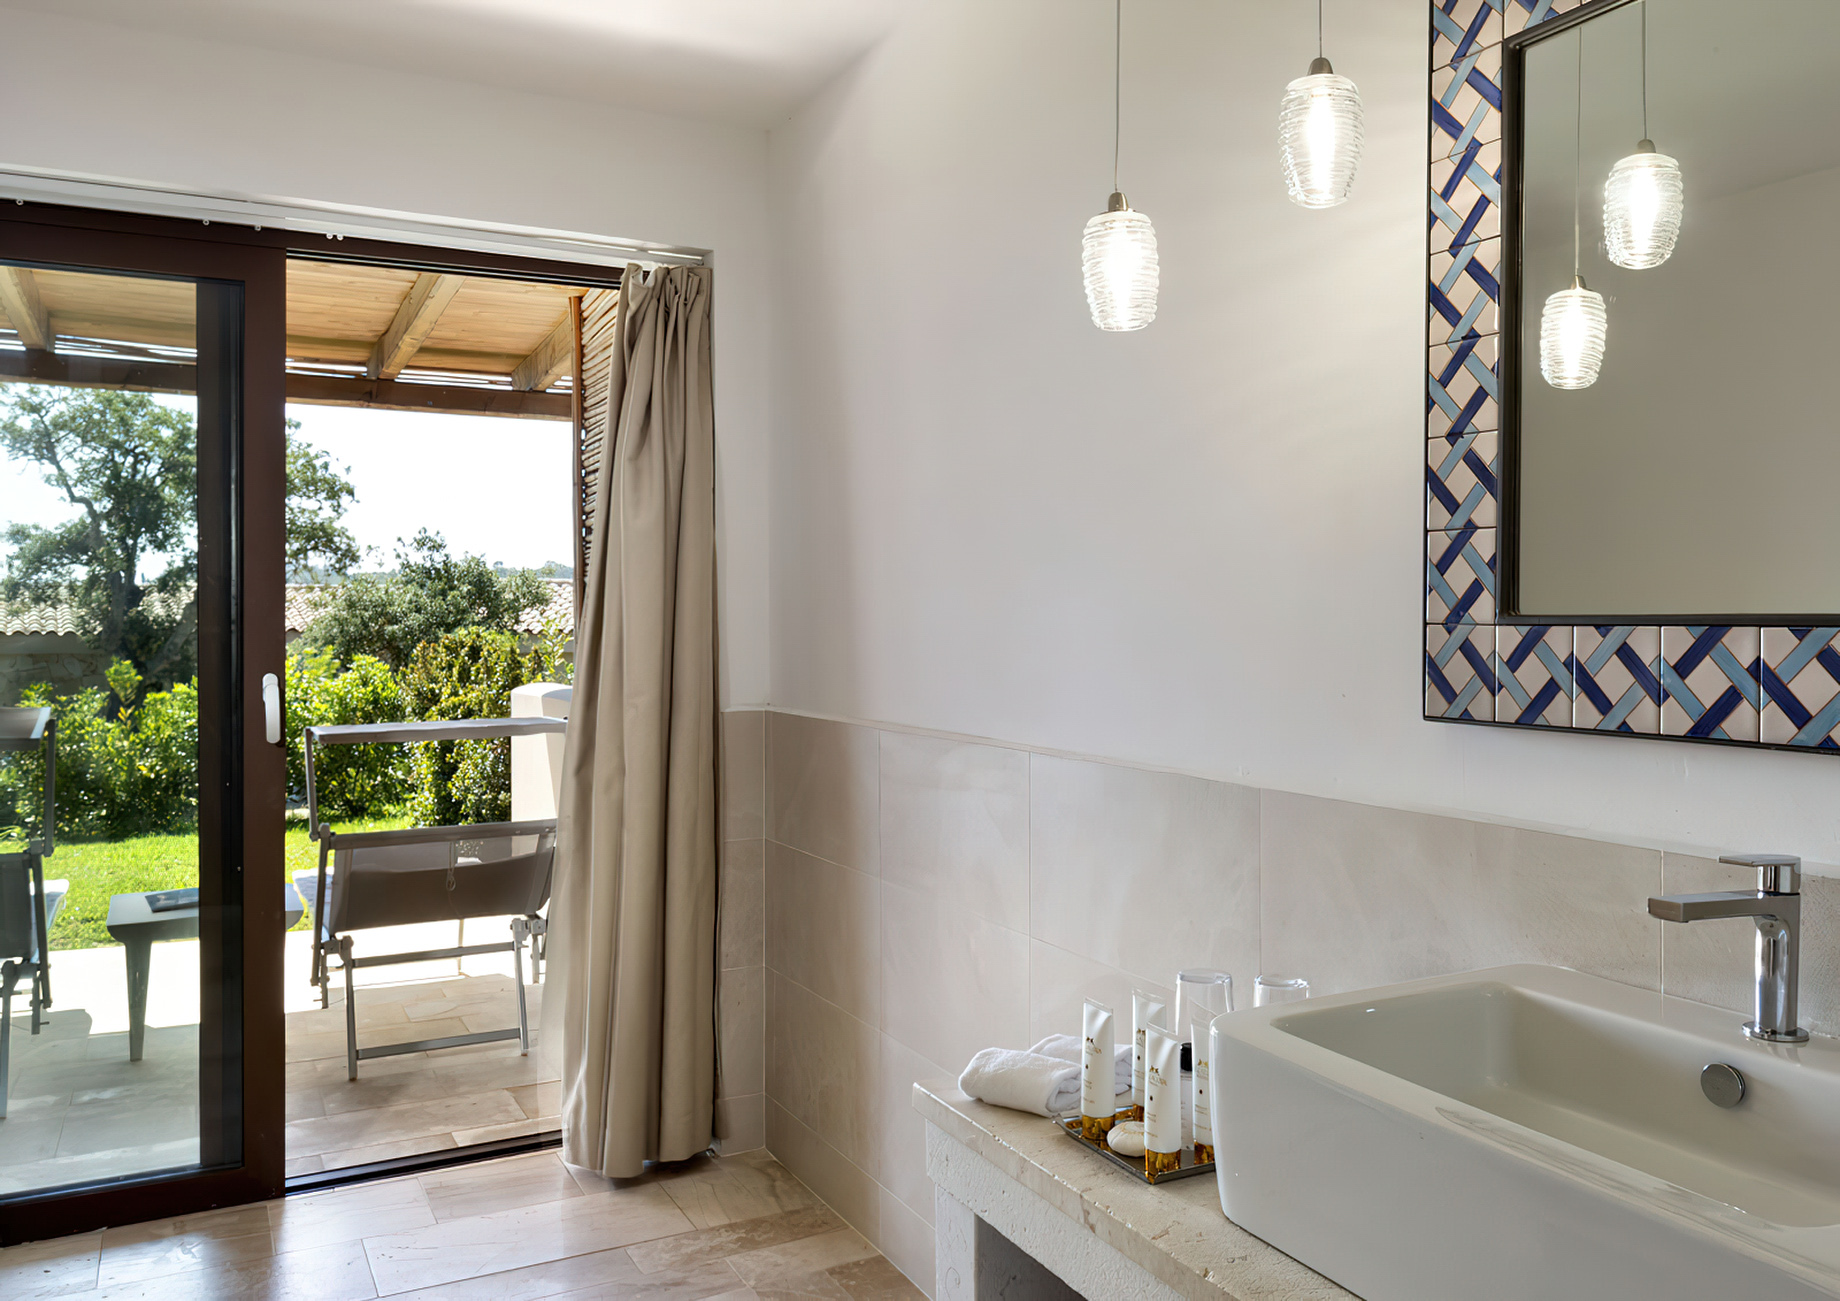 Baglioni Resort Sardinia - San Teodoro, Sardegna, Italy - Grand Deluxe Room Bathroom